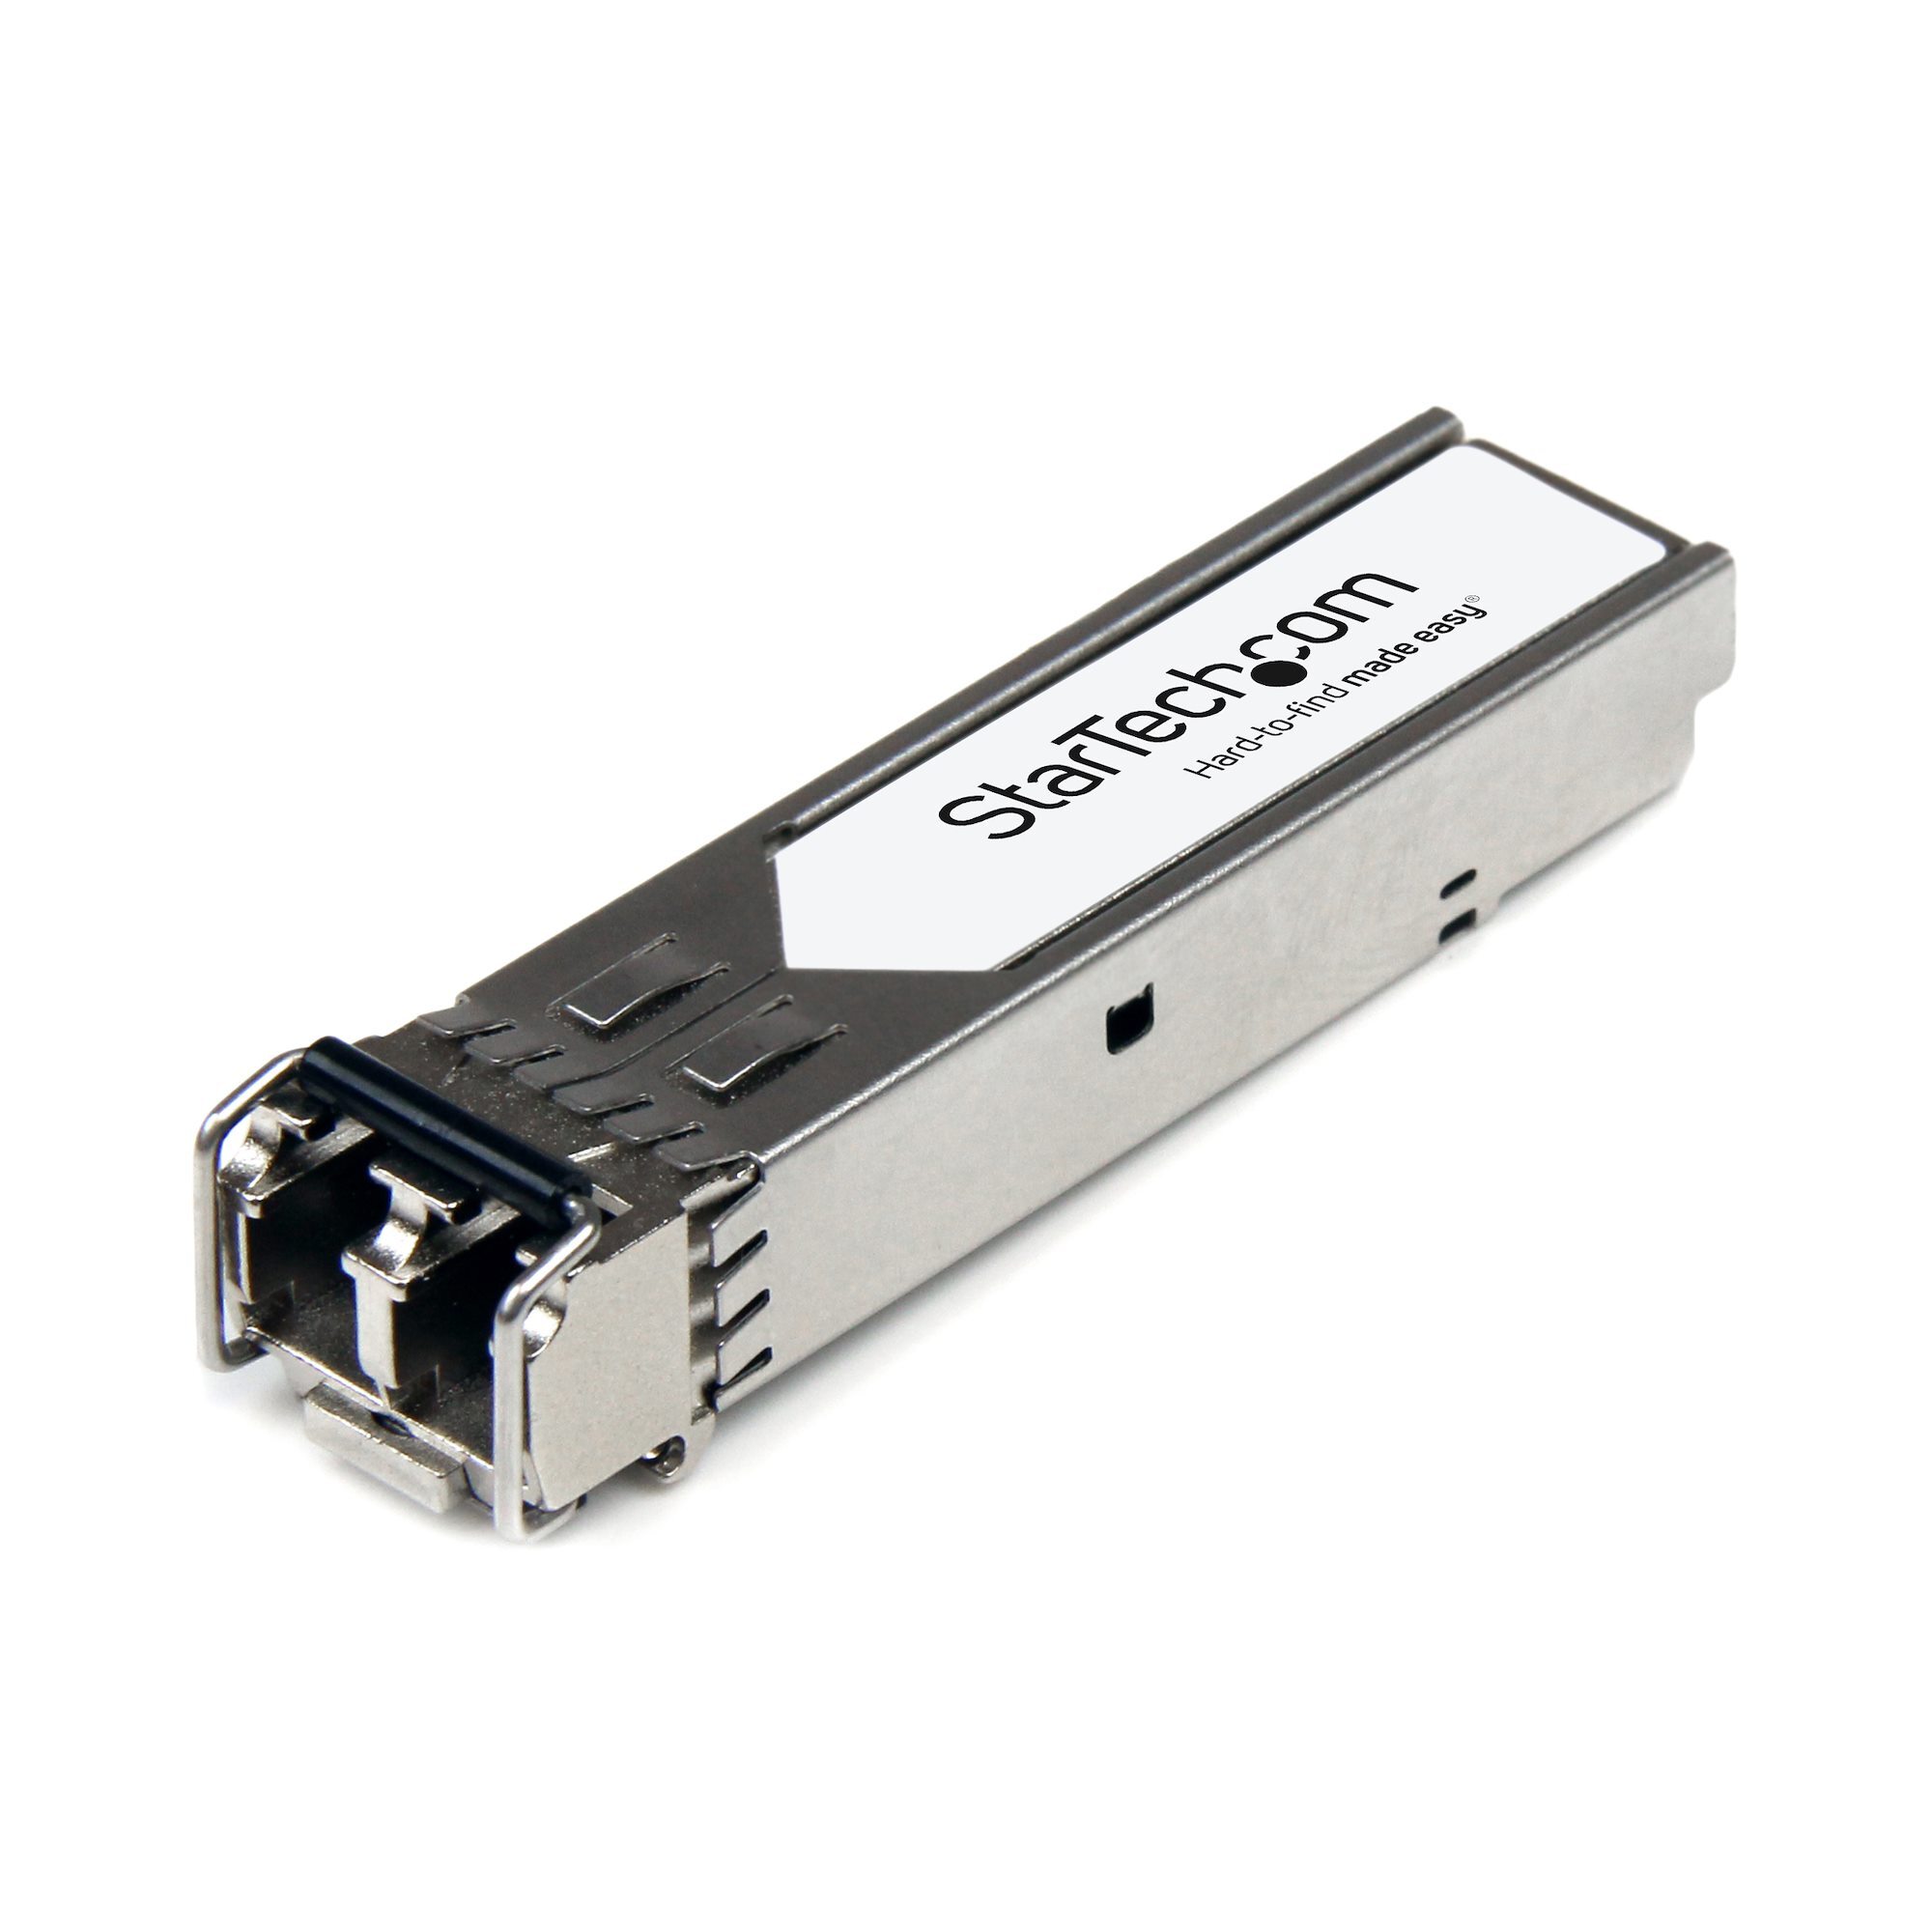 StarTech.com Brocade 10G-SFPP-SR compatibel SFP+ module 10GBase-SR glasvezel optische transceiver 200 m (10G-SFPP-SR-ST)